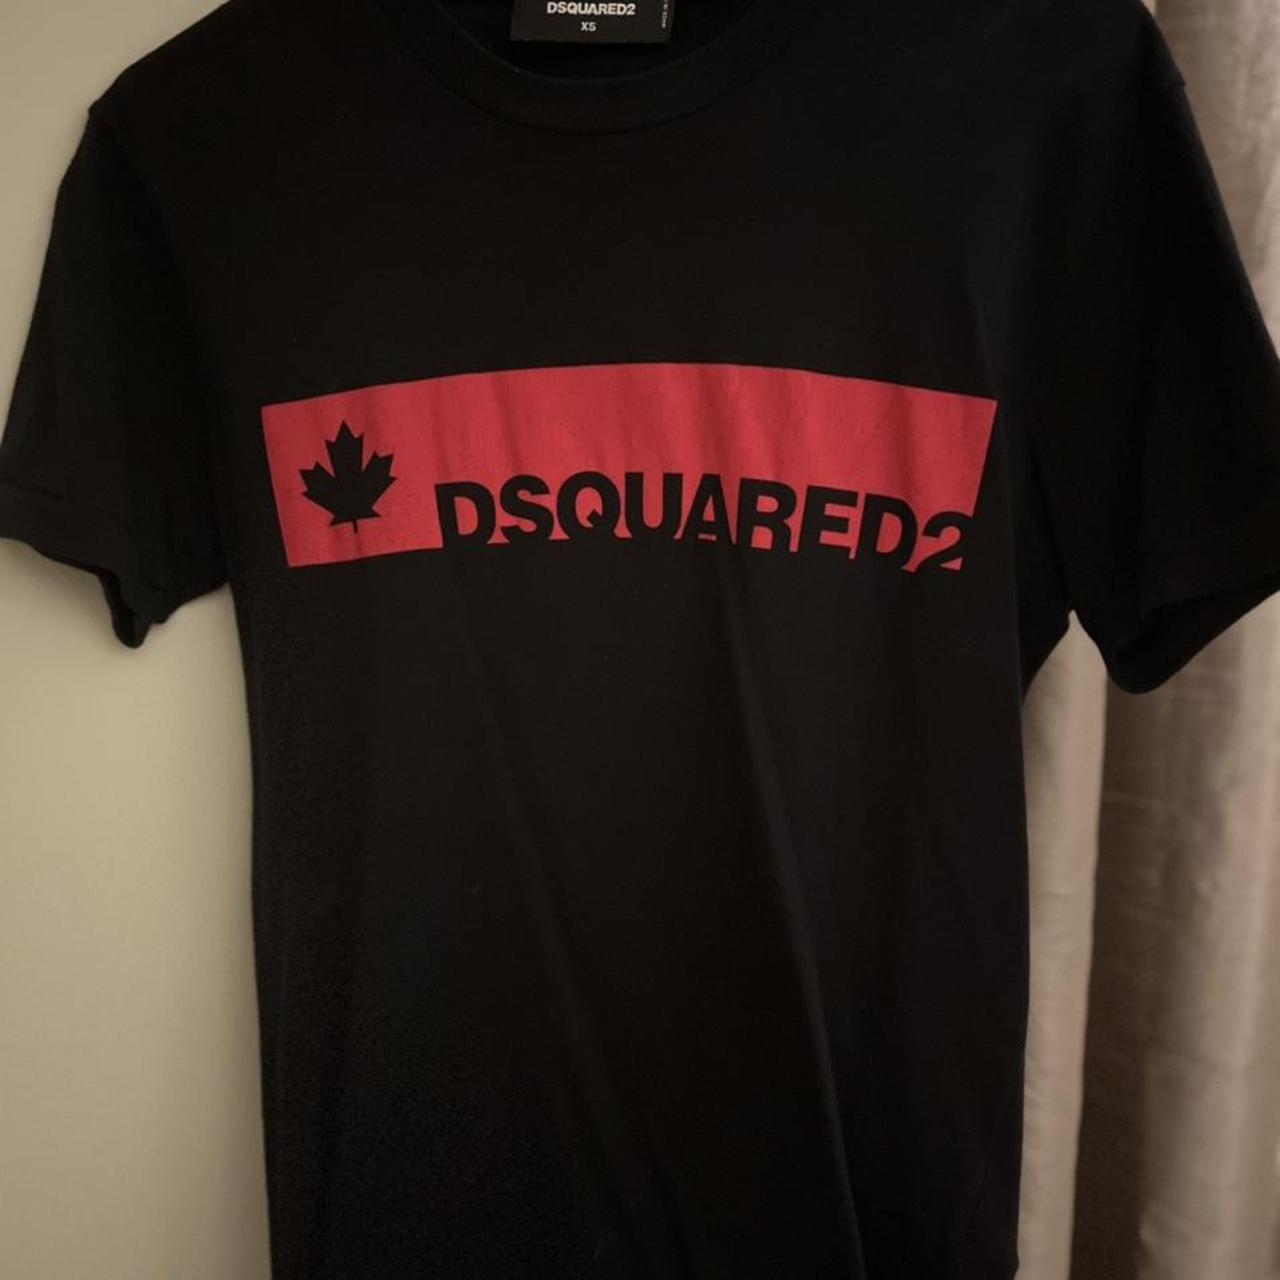 Dsquared2 Men's Black and Red T-shirt | Depop